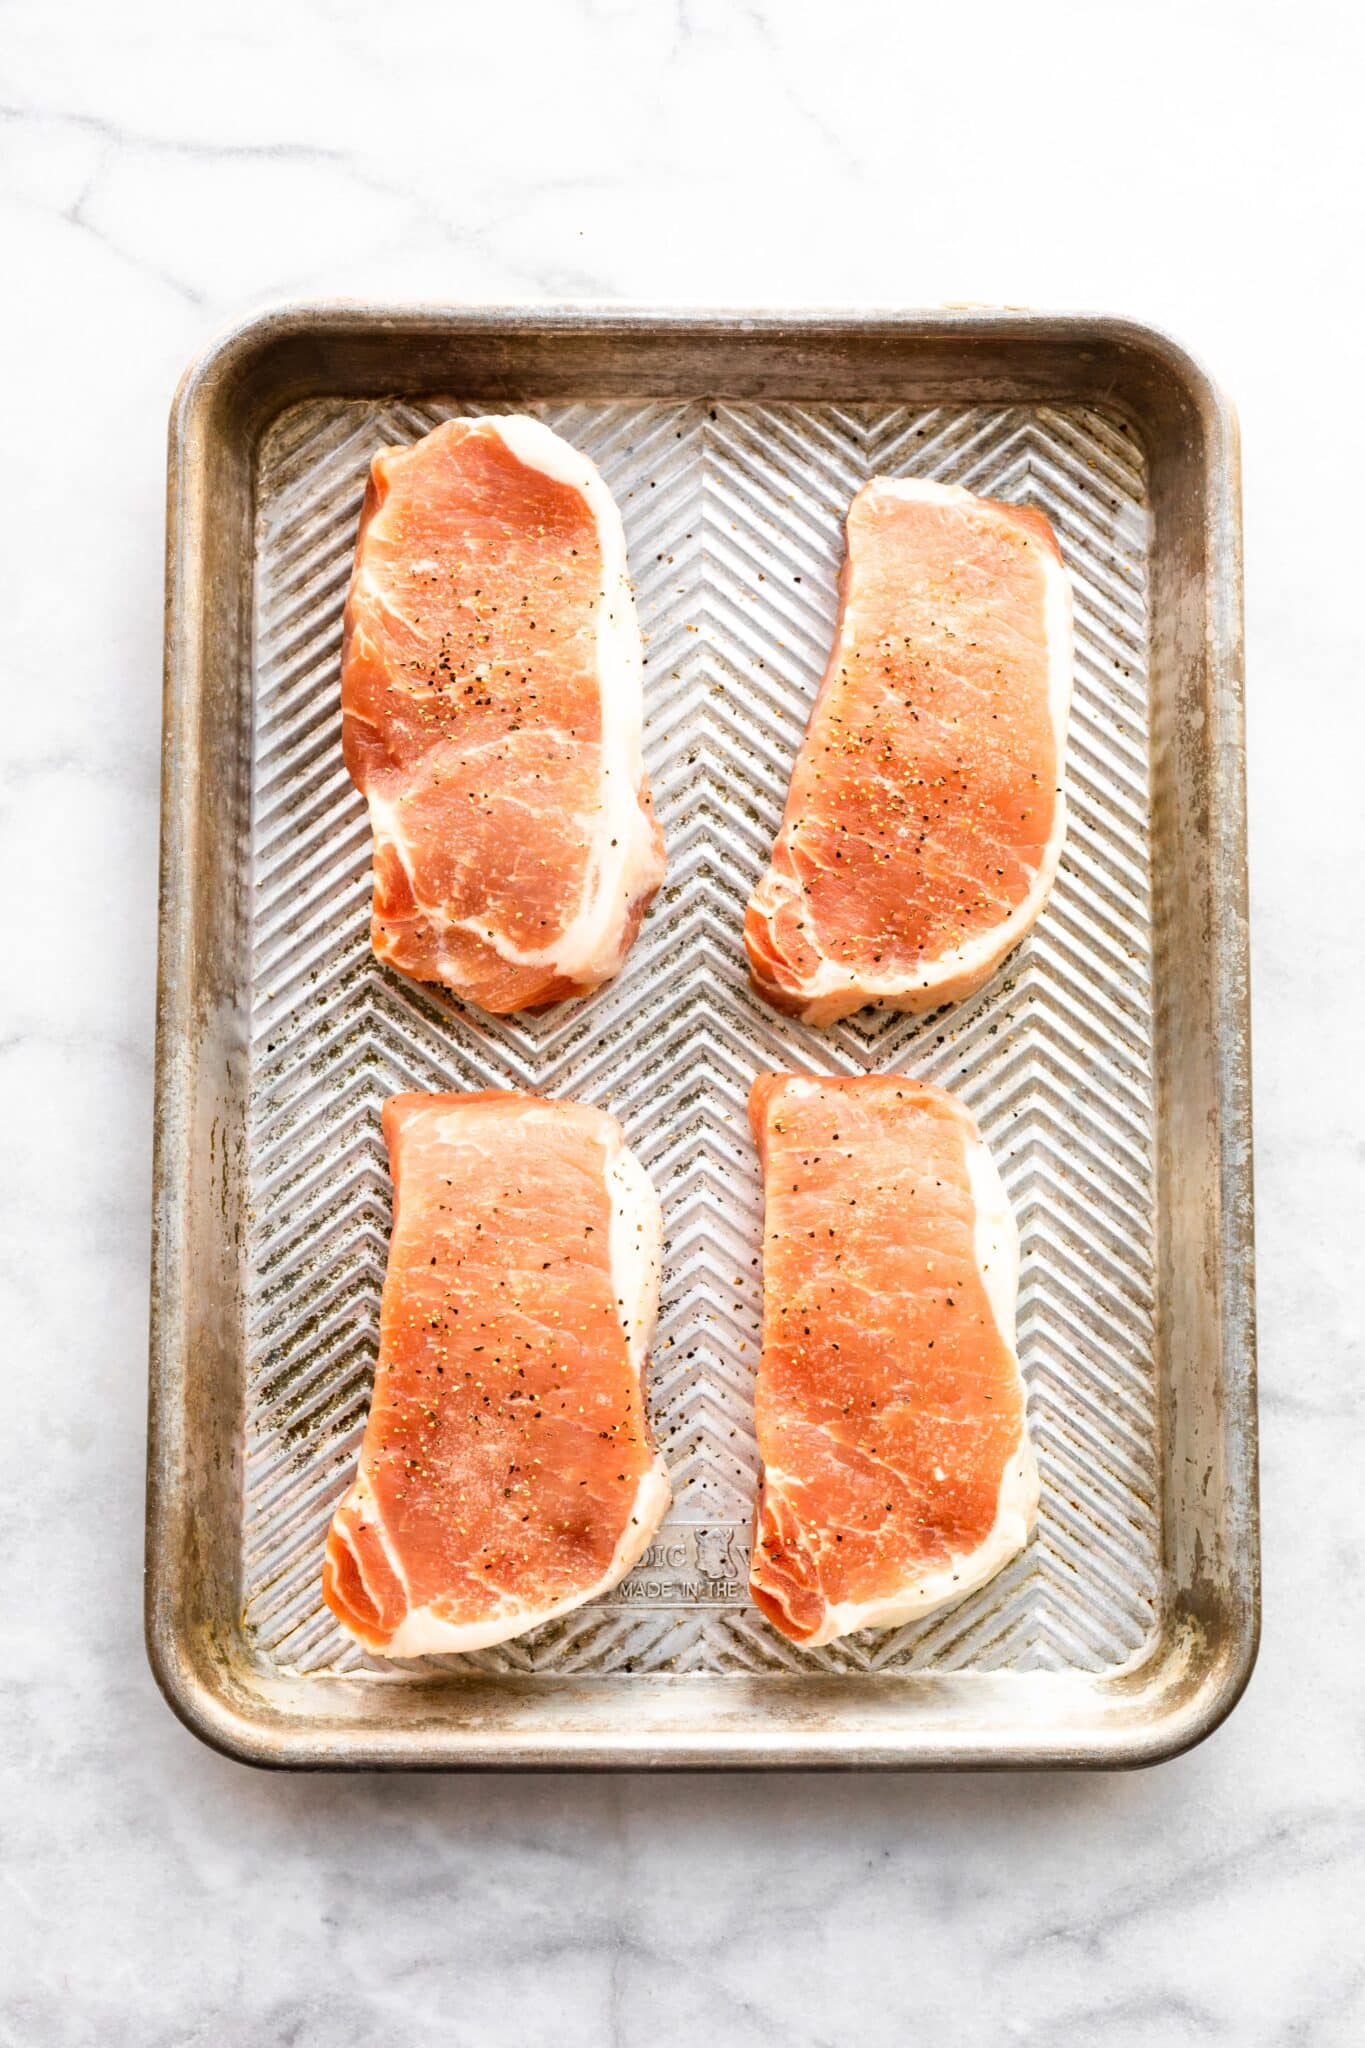 Four boneless pork chops seasoned with salt and pepper on a metal sheet pan.